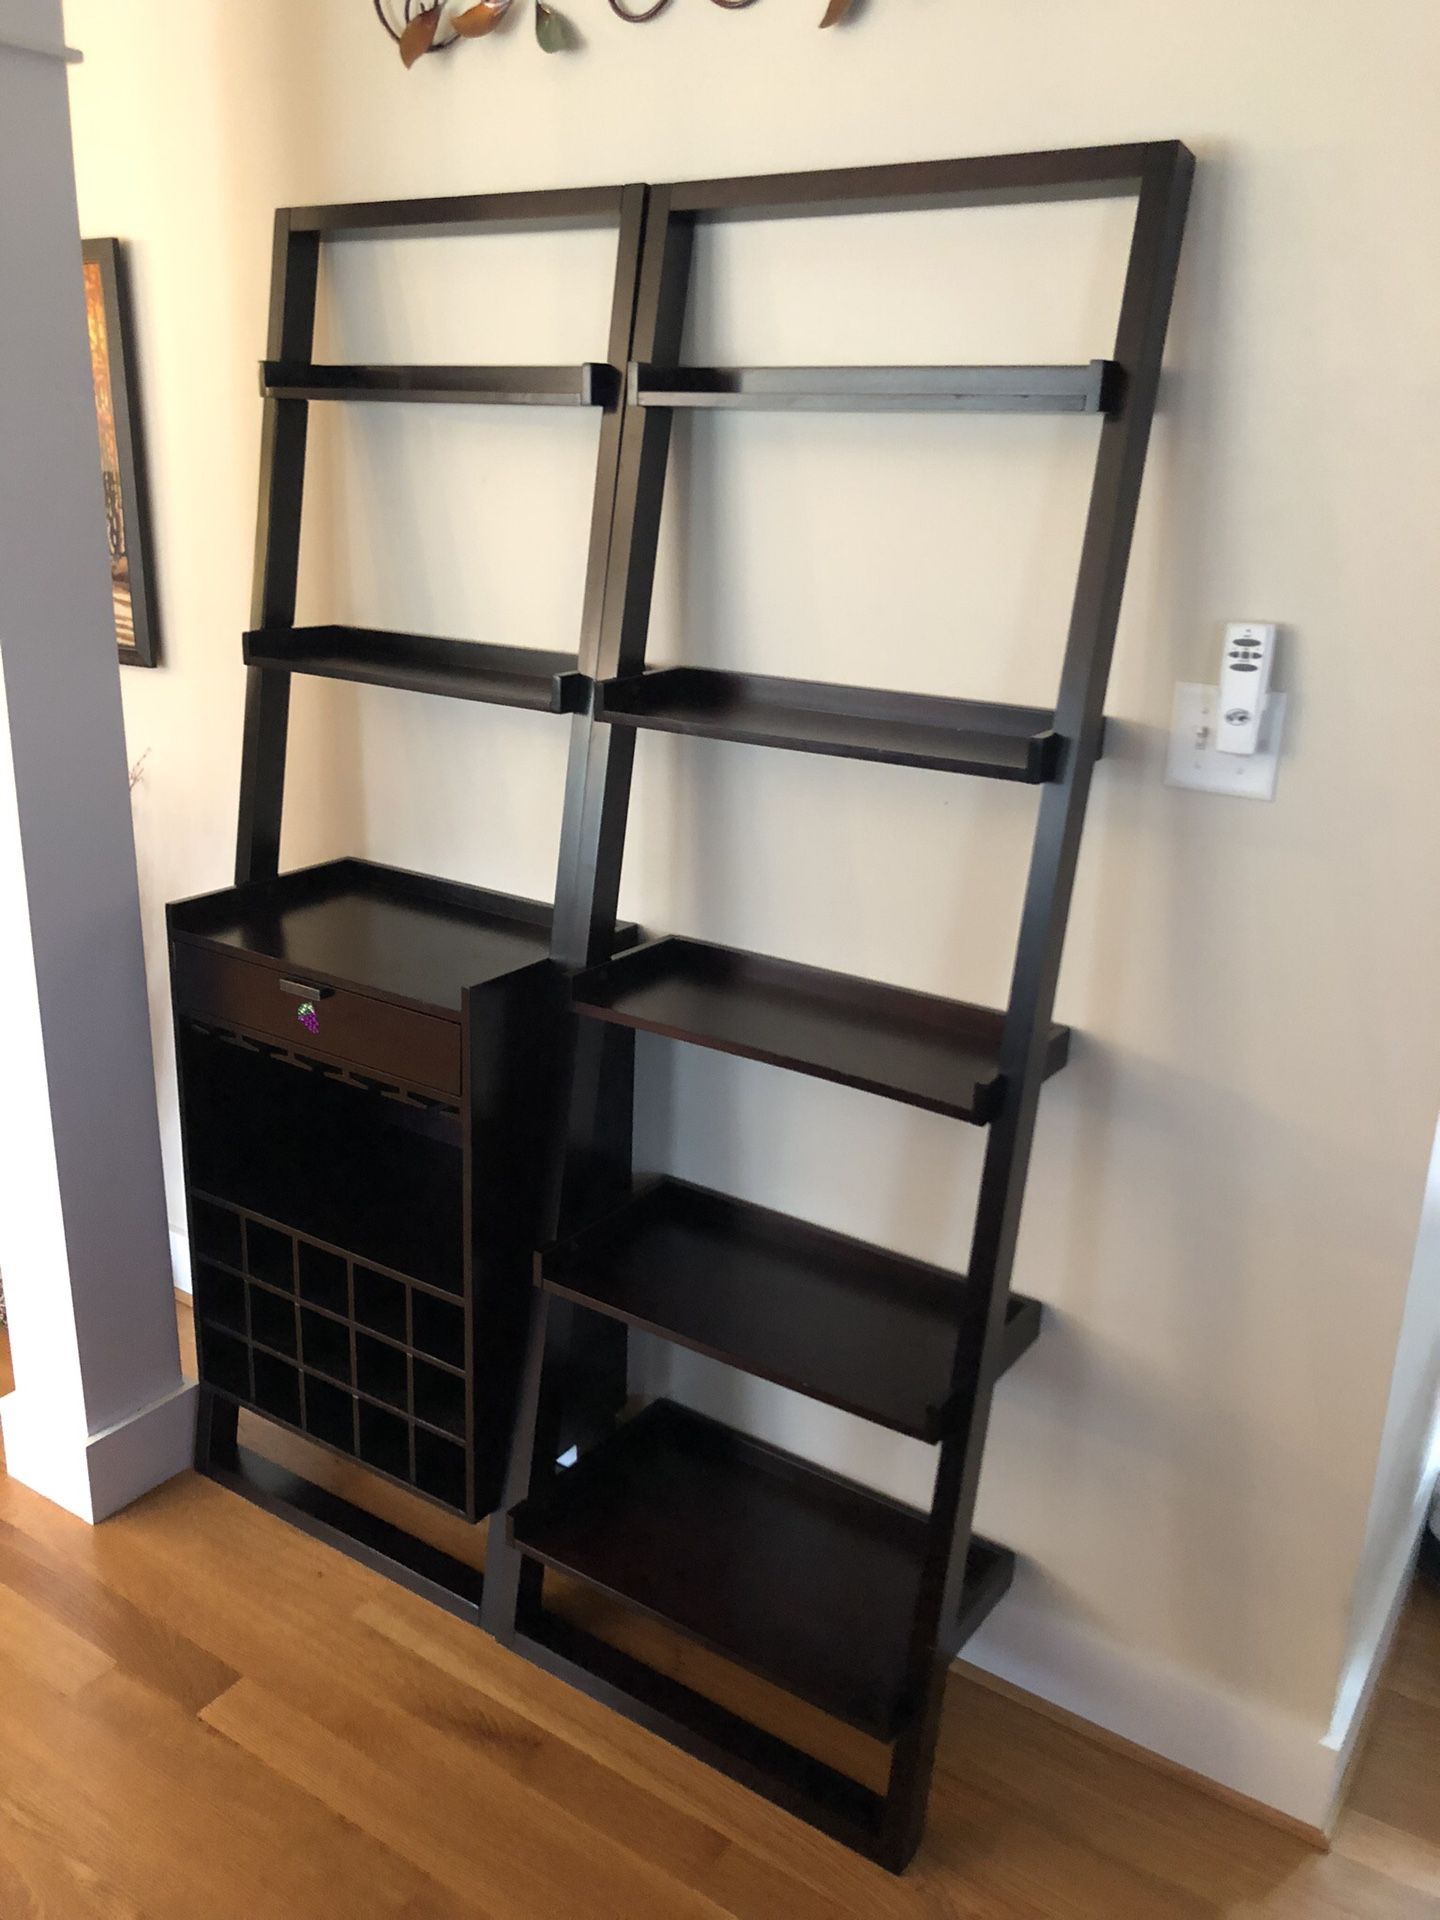 Ladder bookshelves and matching wine bar